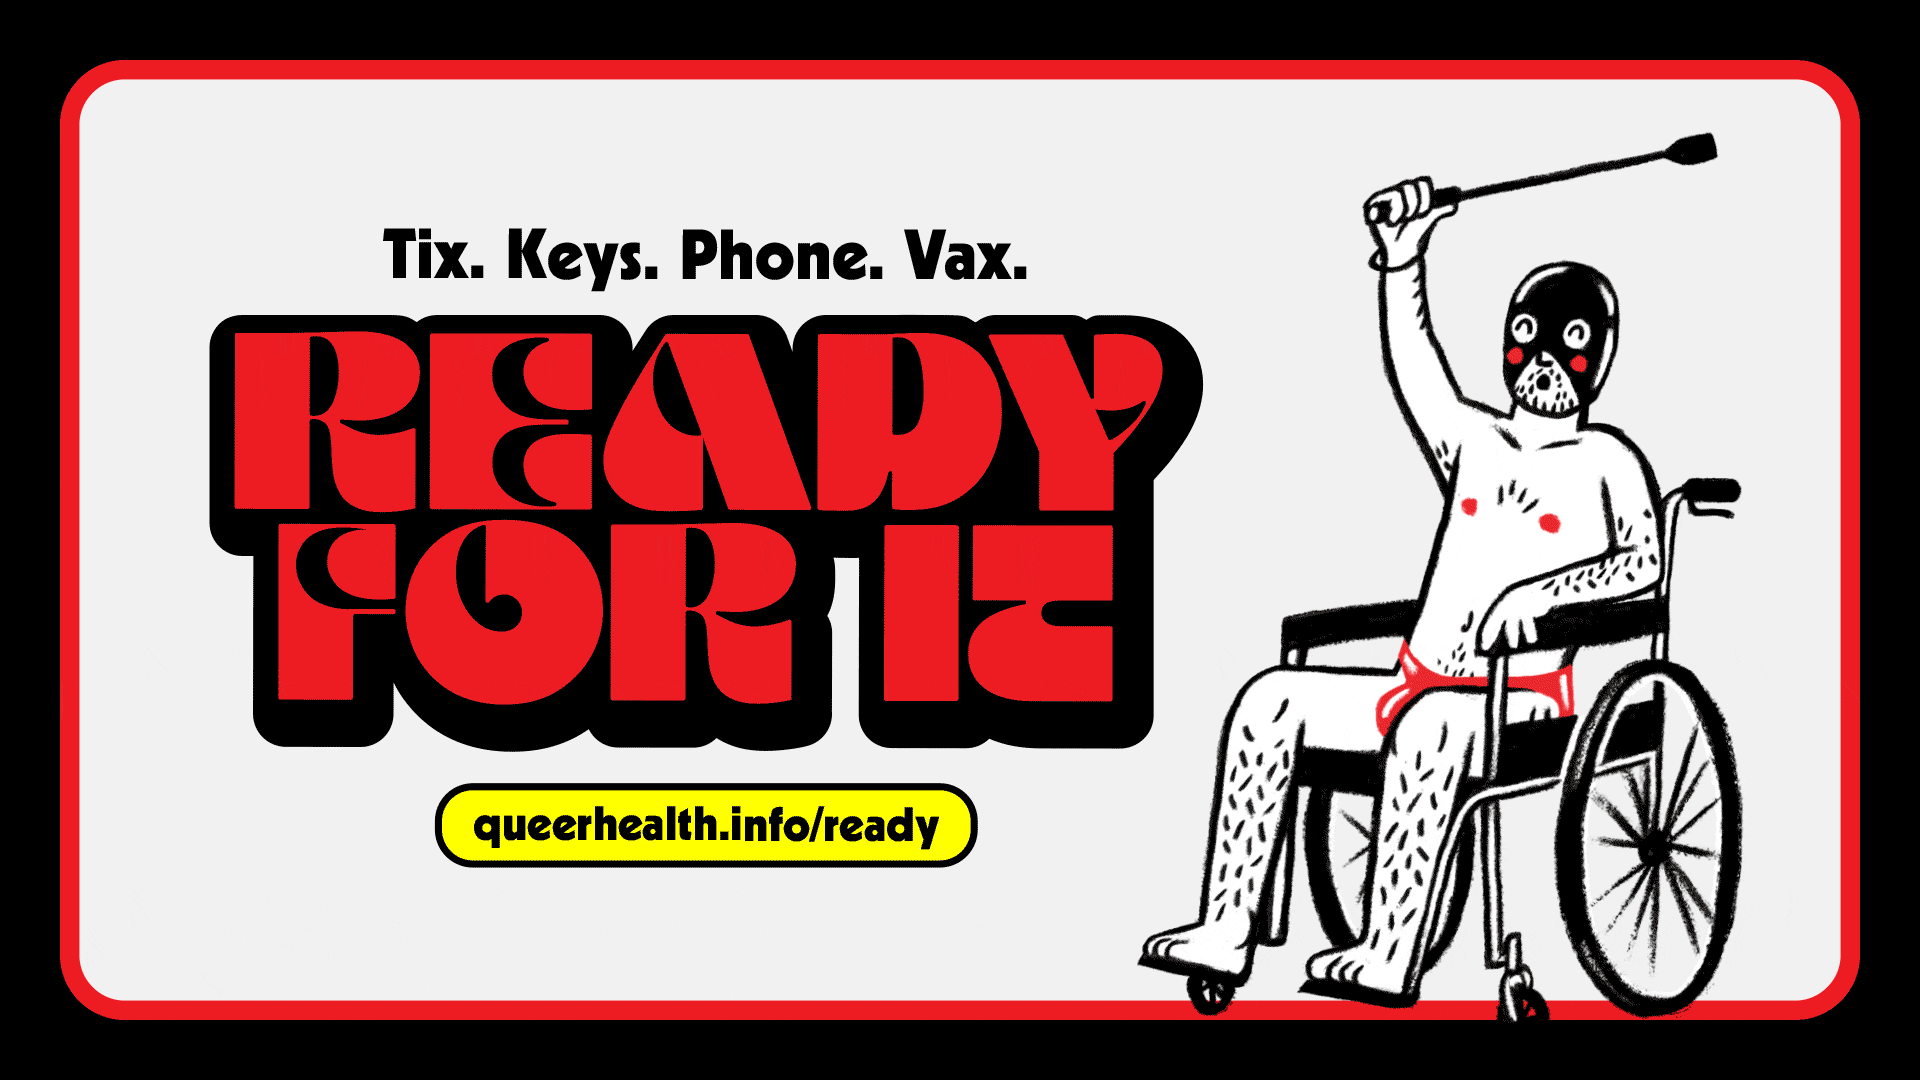 “READY FOR IT: Tix. Keys. Phone. Vax.” animation series 8